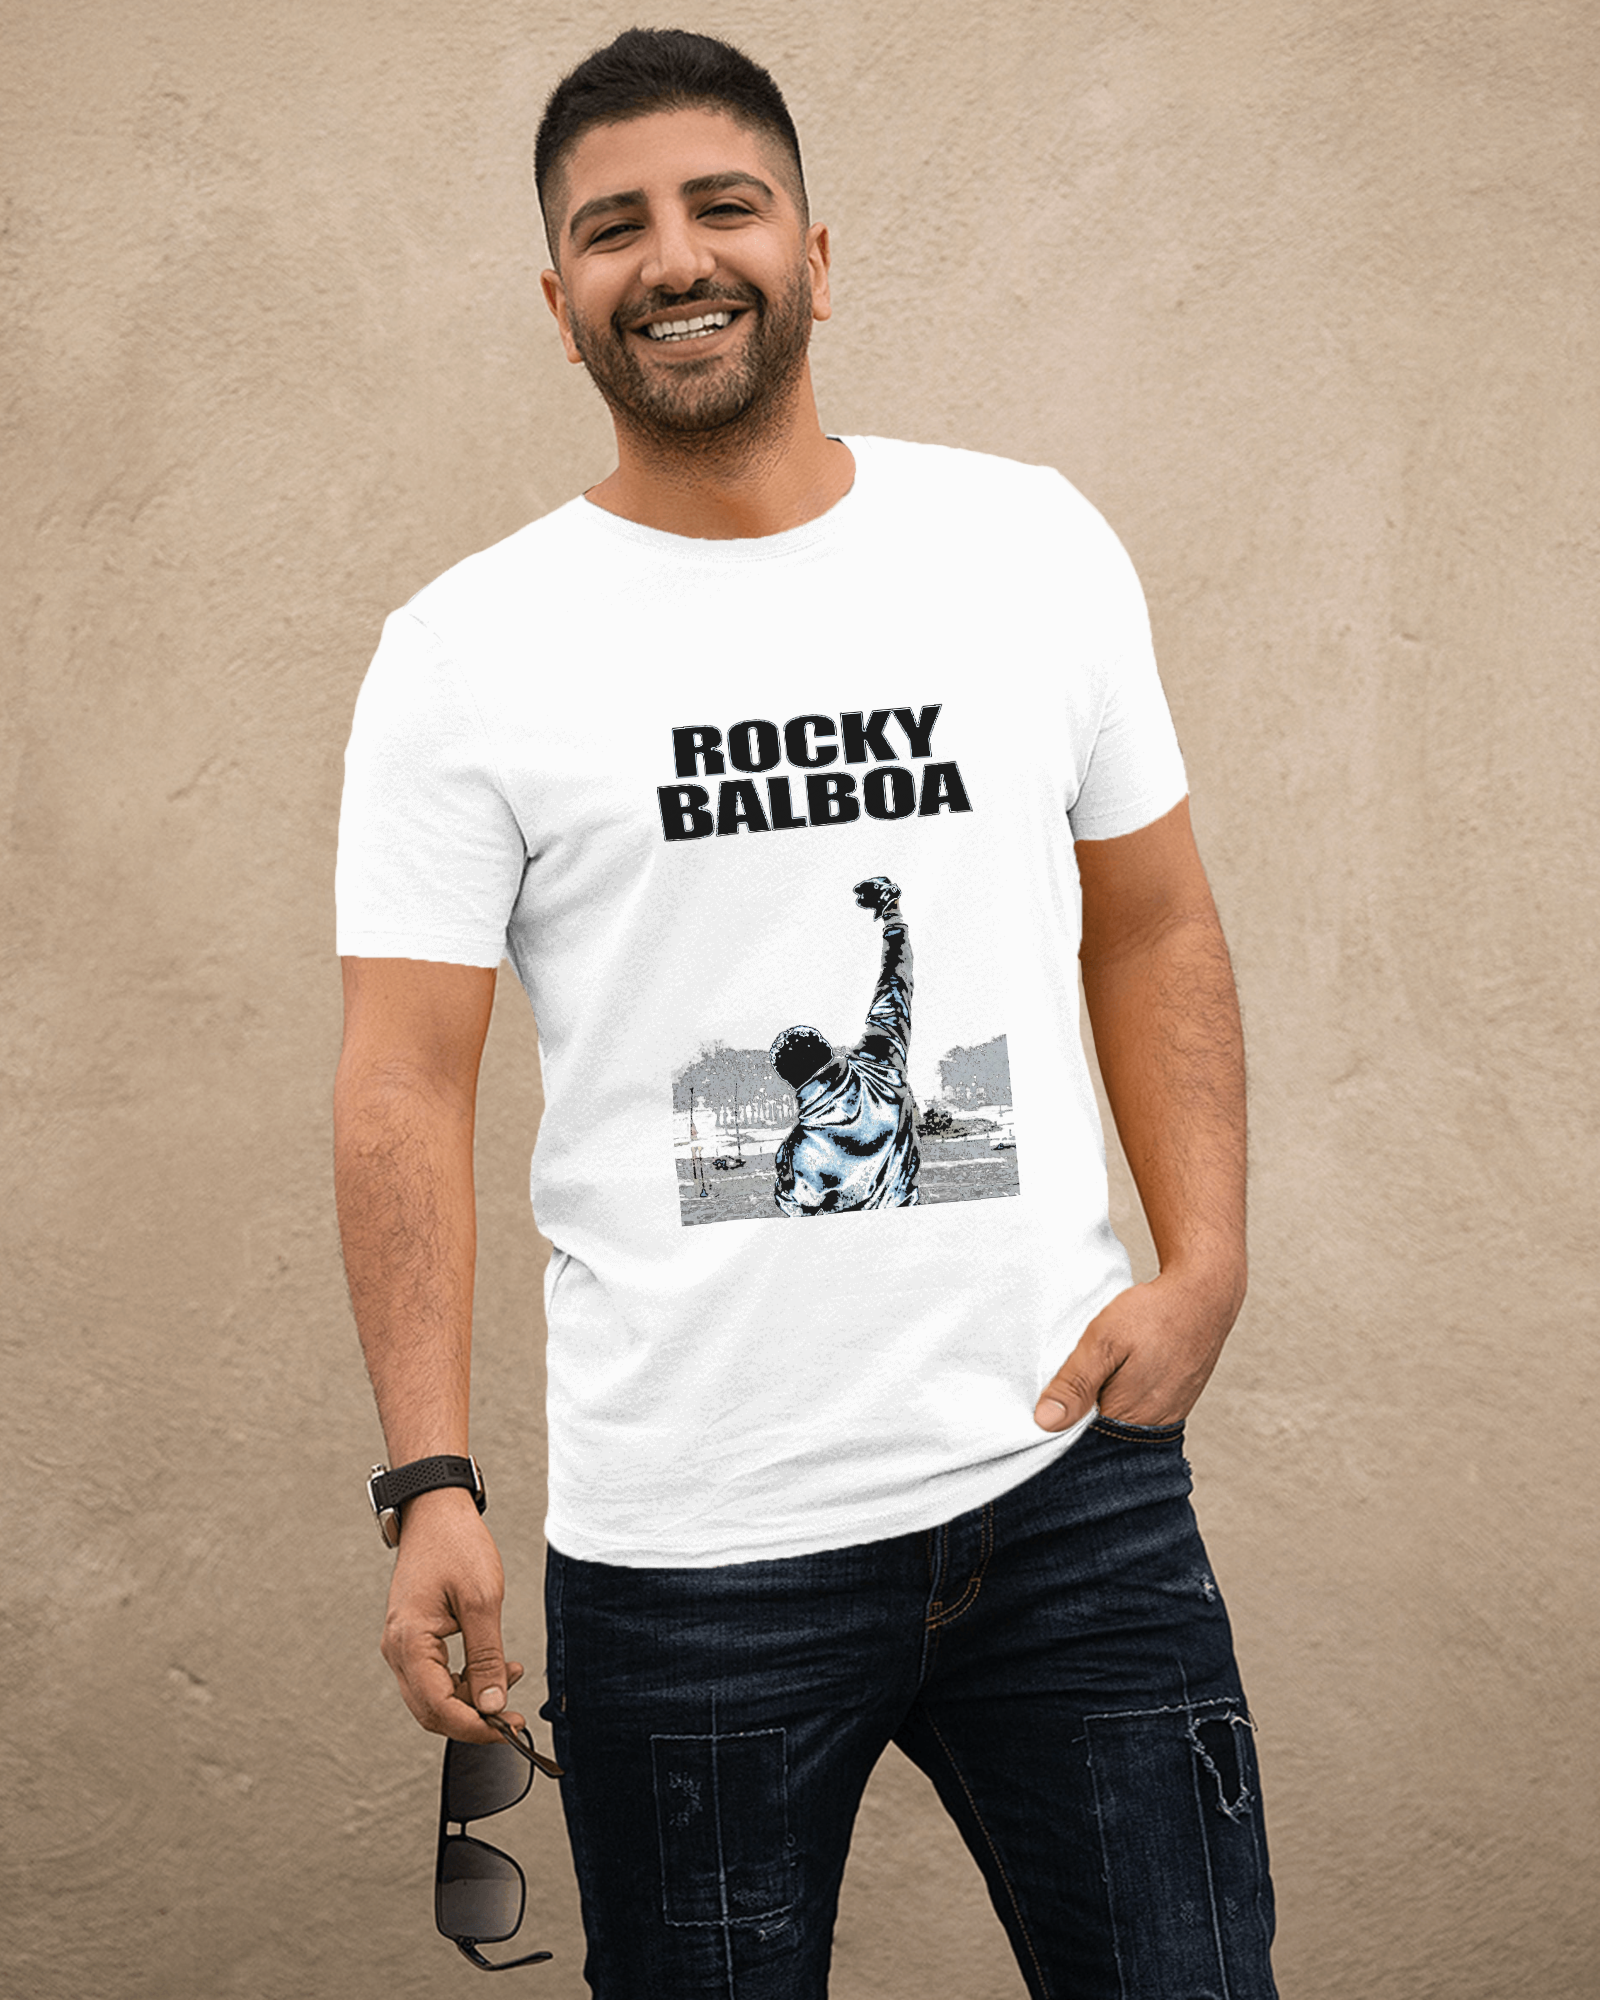 "ROCKY BALBOA" Poster Printed Tshirt